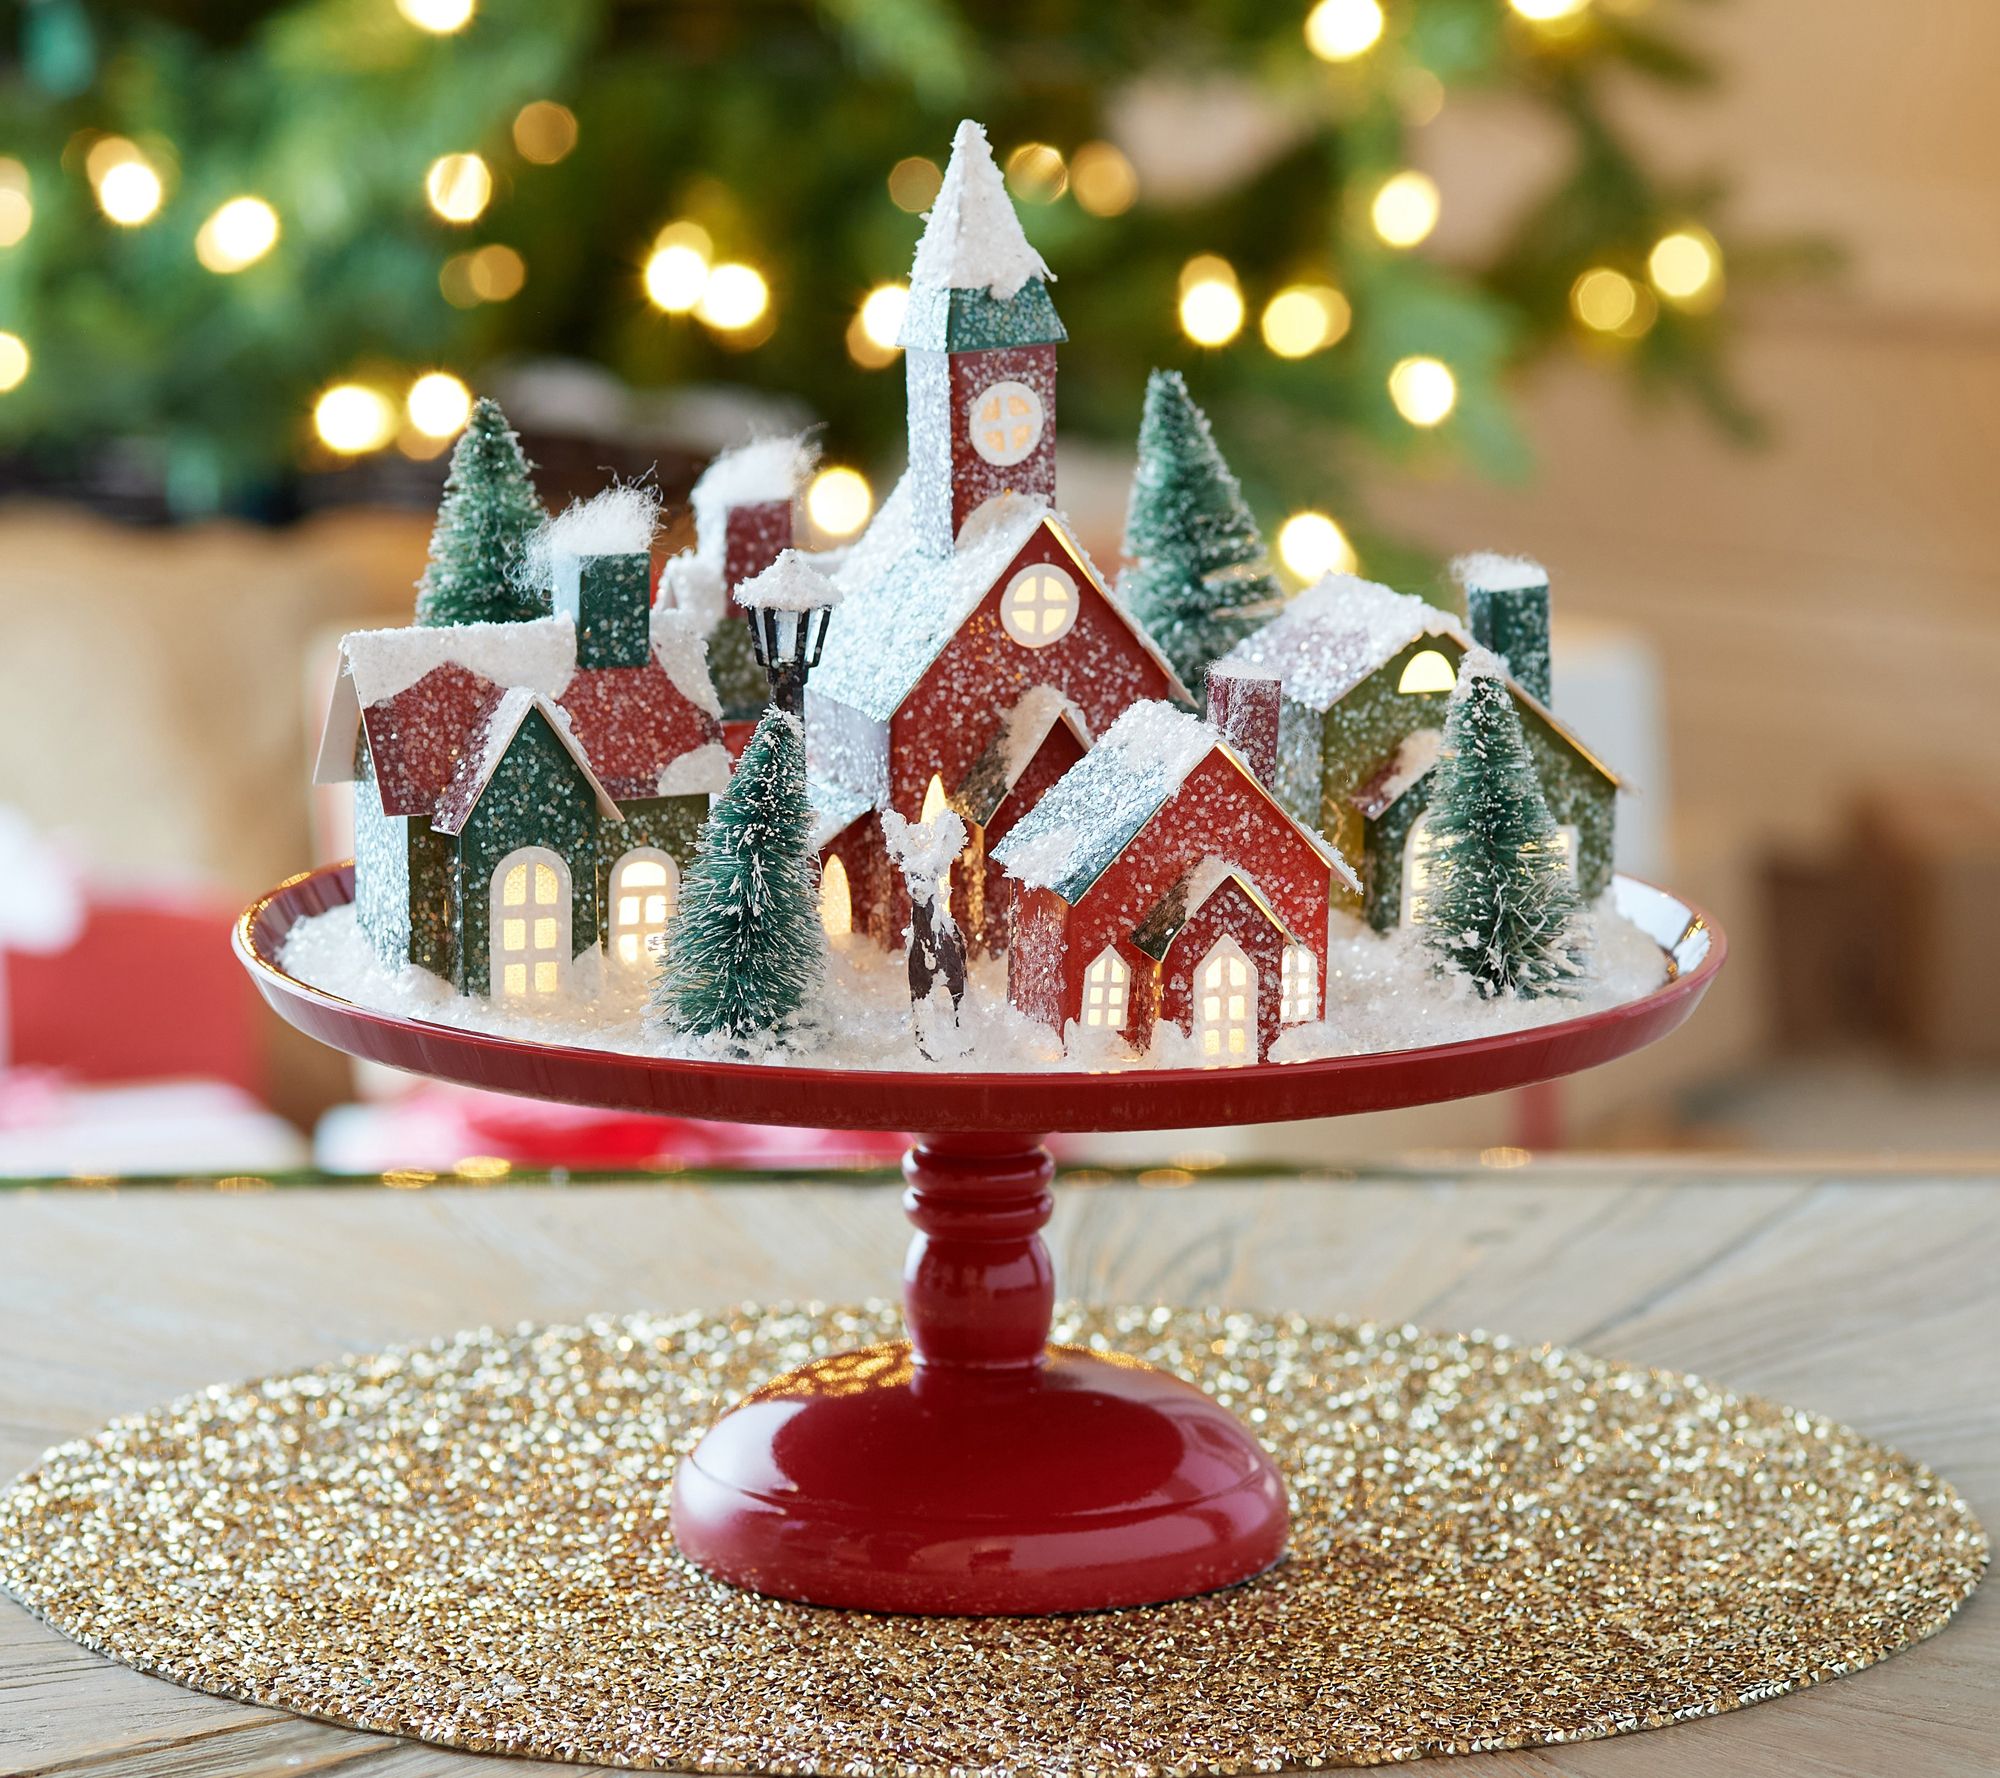 Mr. Christmas Illuminated Retro Village on Cake Plate - QVC.com